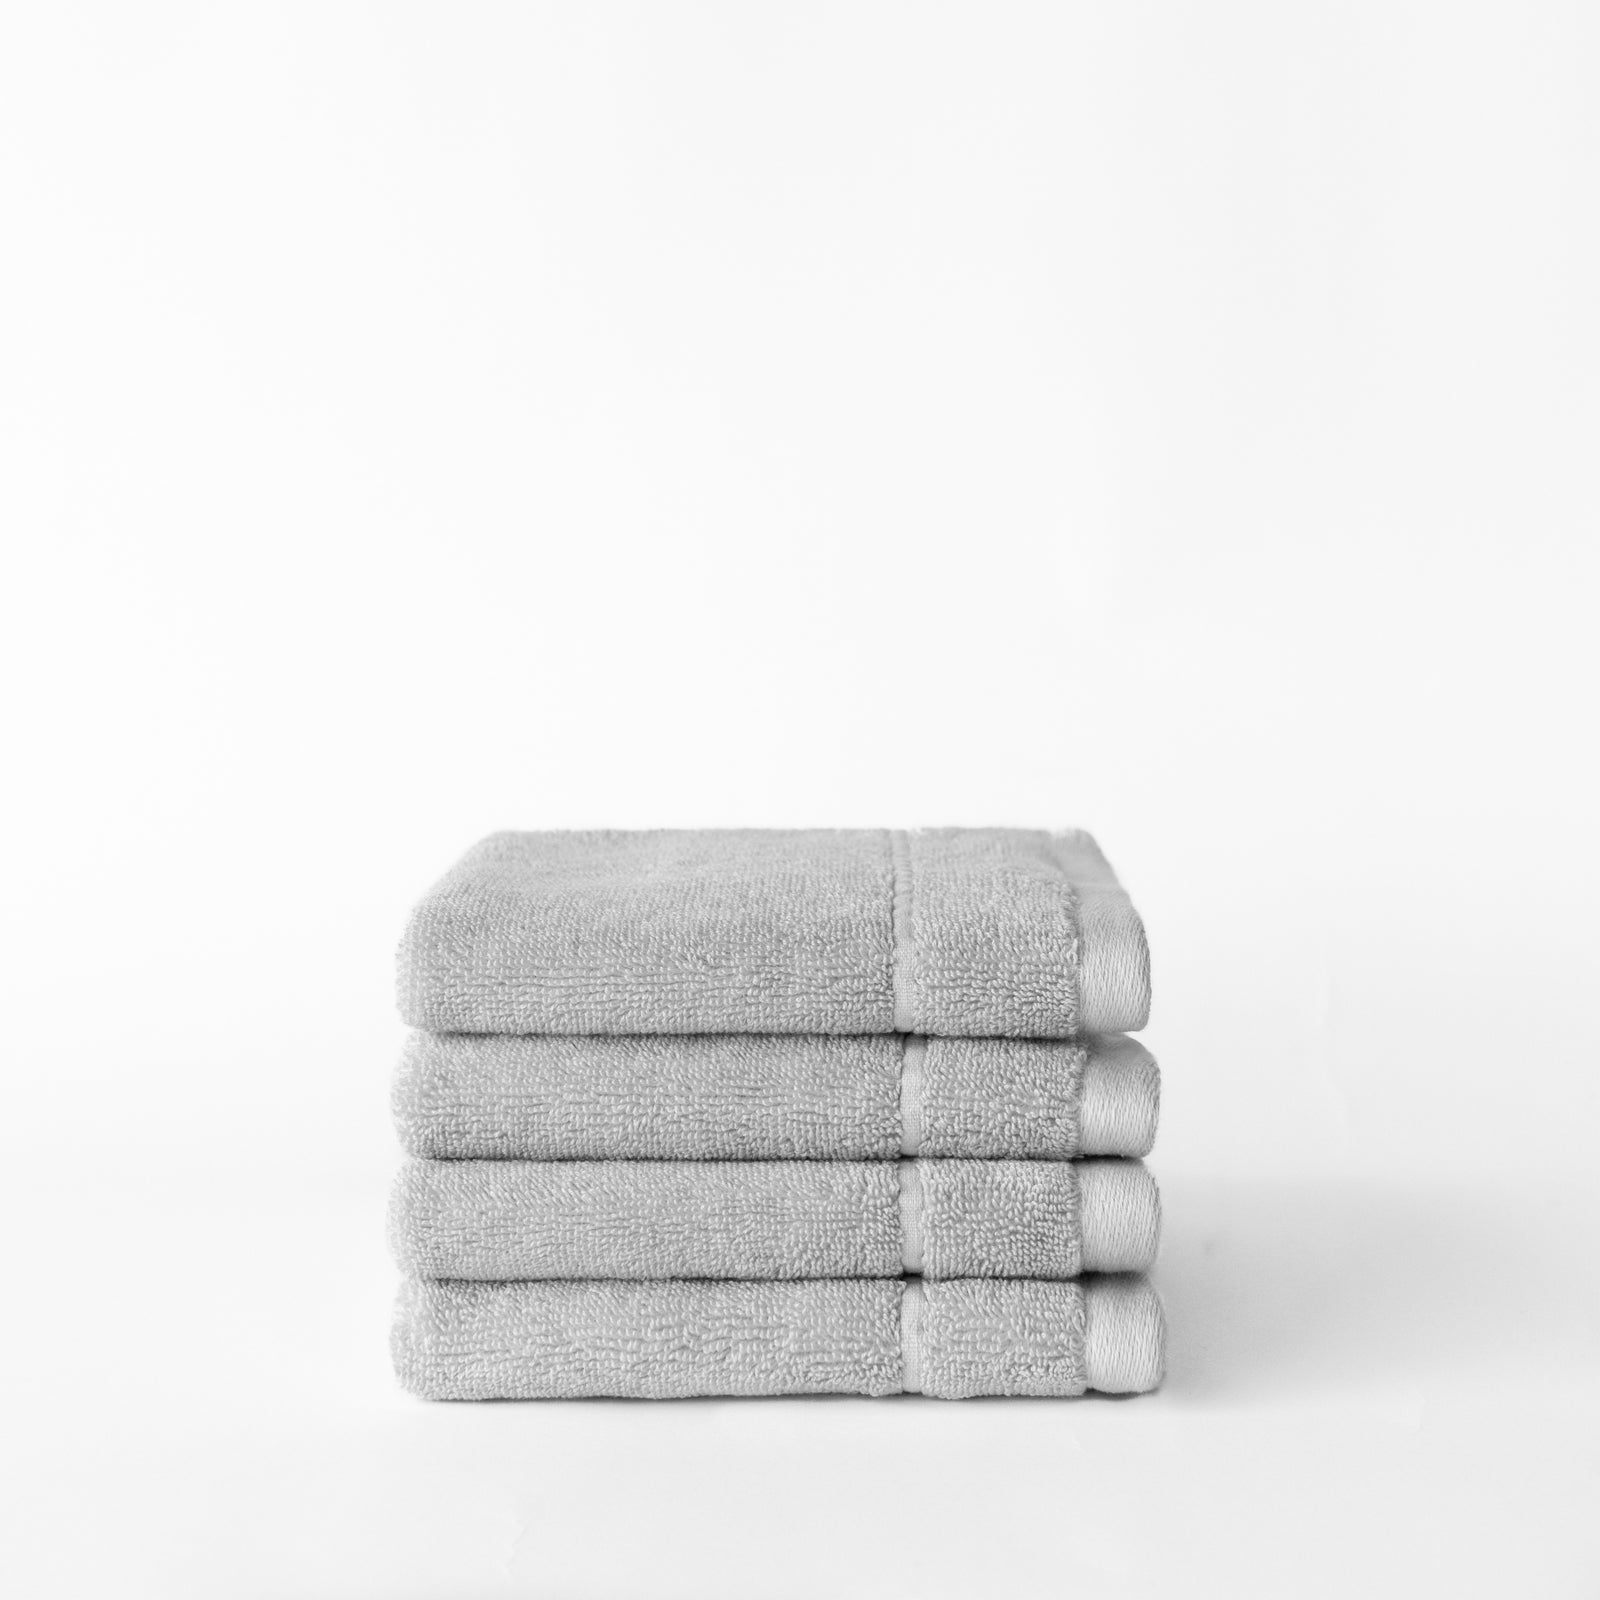 Light Grey Premium Plush Wash Cloths. Photo of Premium Plush Wash Cloths taken with white background 